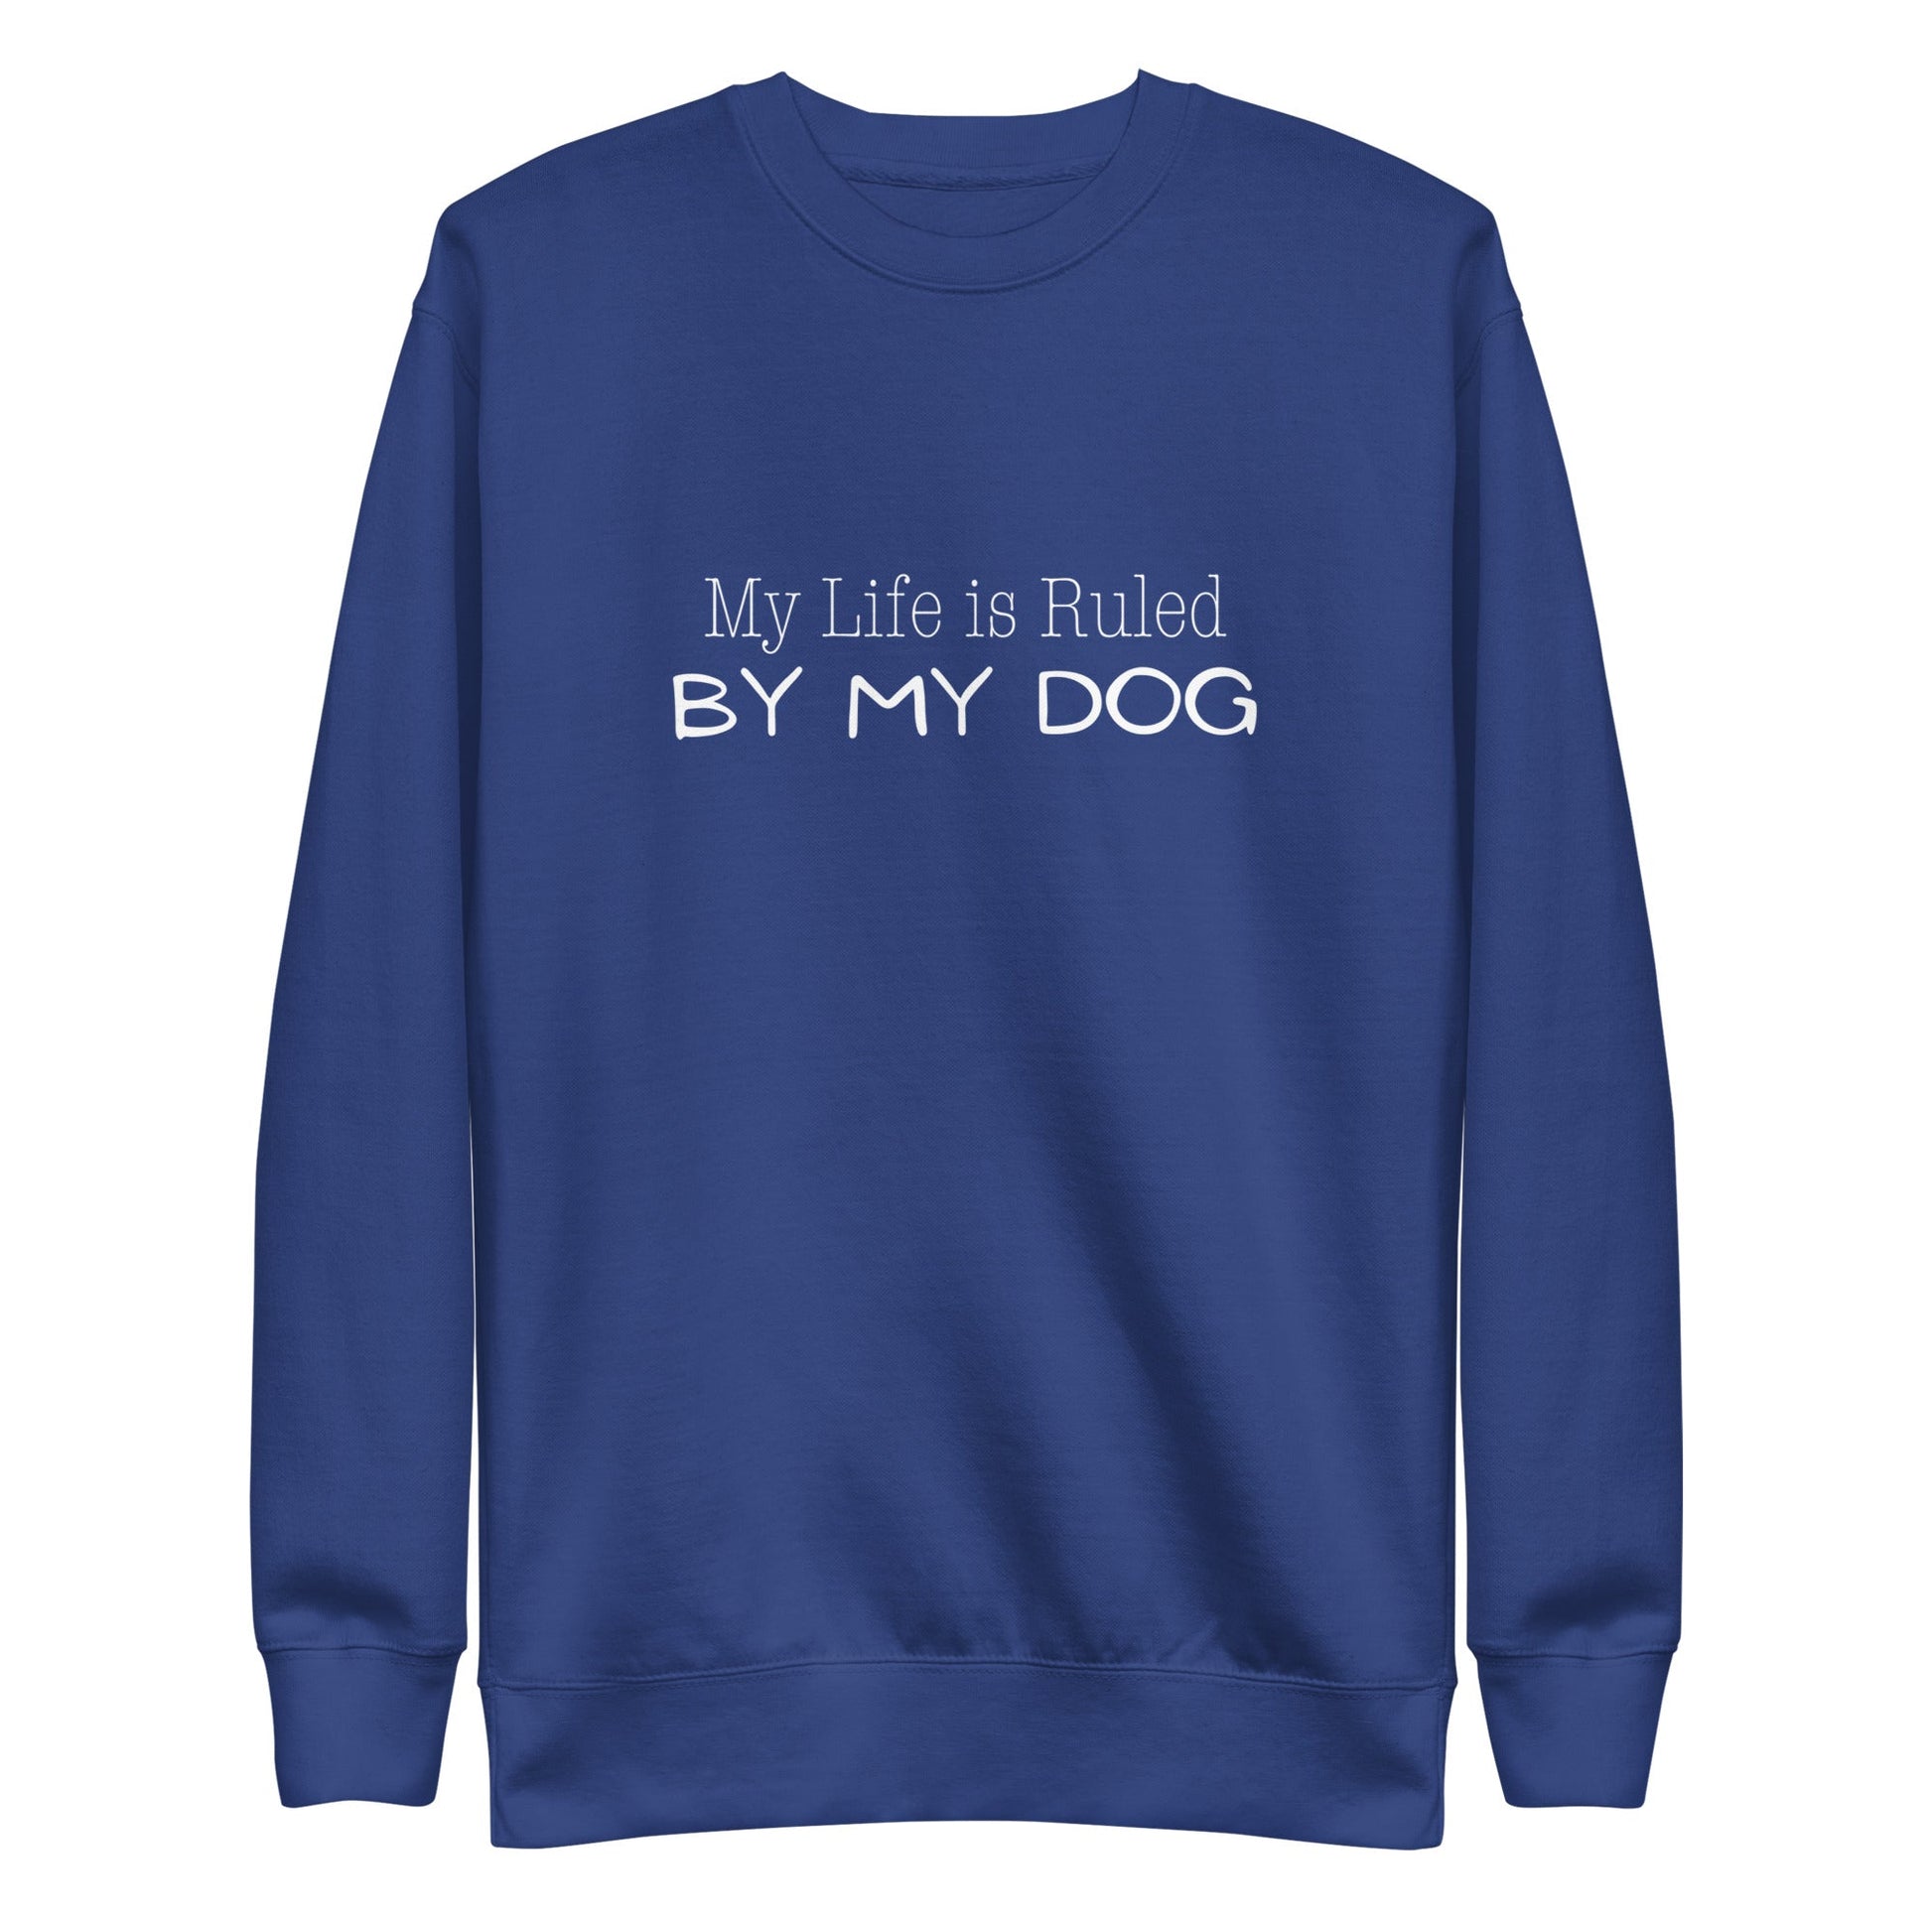 My Life is Ruled by Dog Sweatshirt - Team Royal / S